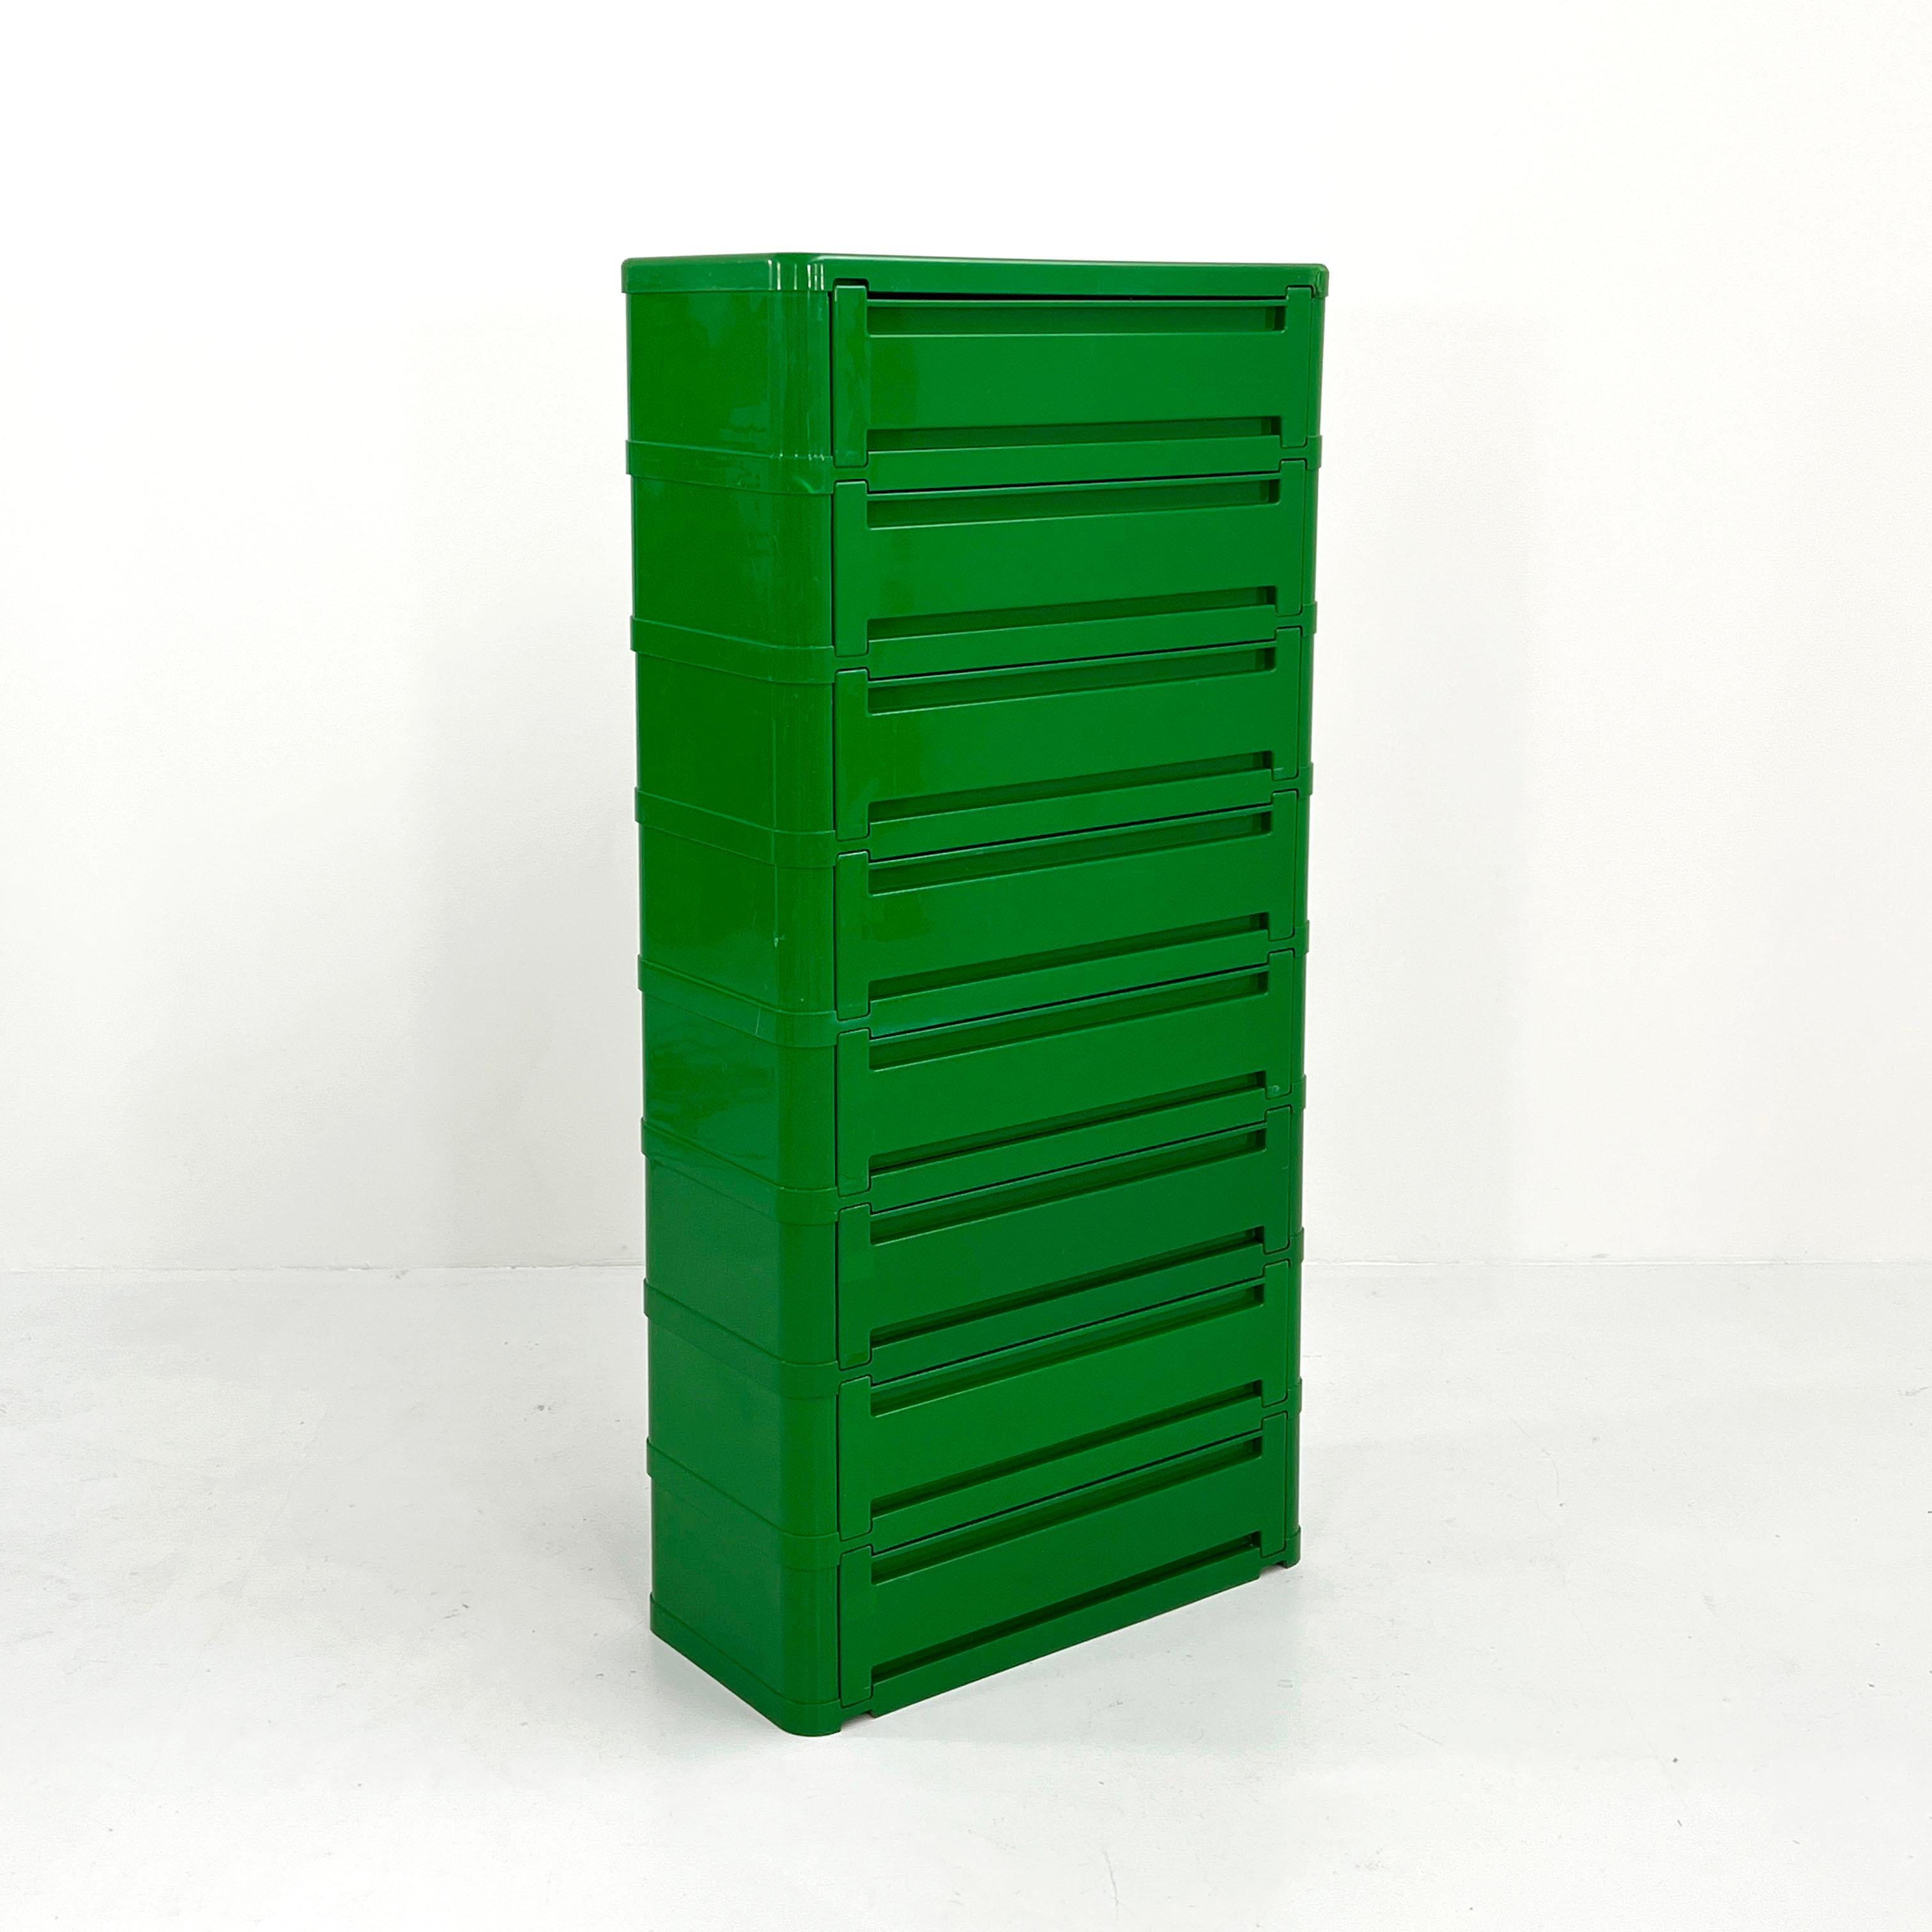 Designer - Olaf Von Bohr
Producer - Kartell
Model - Model “4964”
Design Period - Seventies
Measurements - width 72 cm x depth 34 cm x height 150 cm
Materials - Plastic
Color - Green.